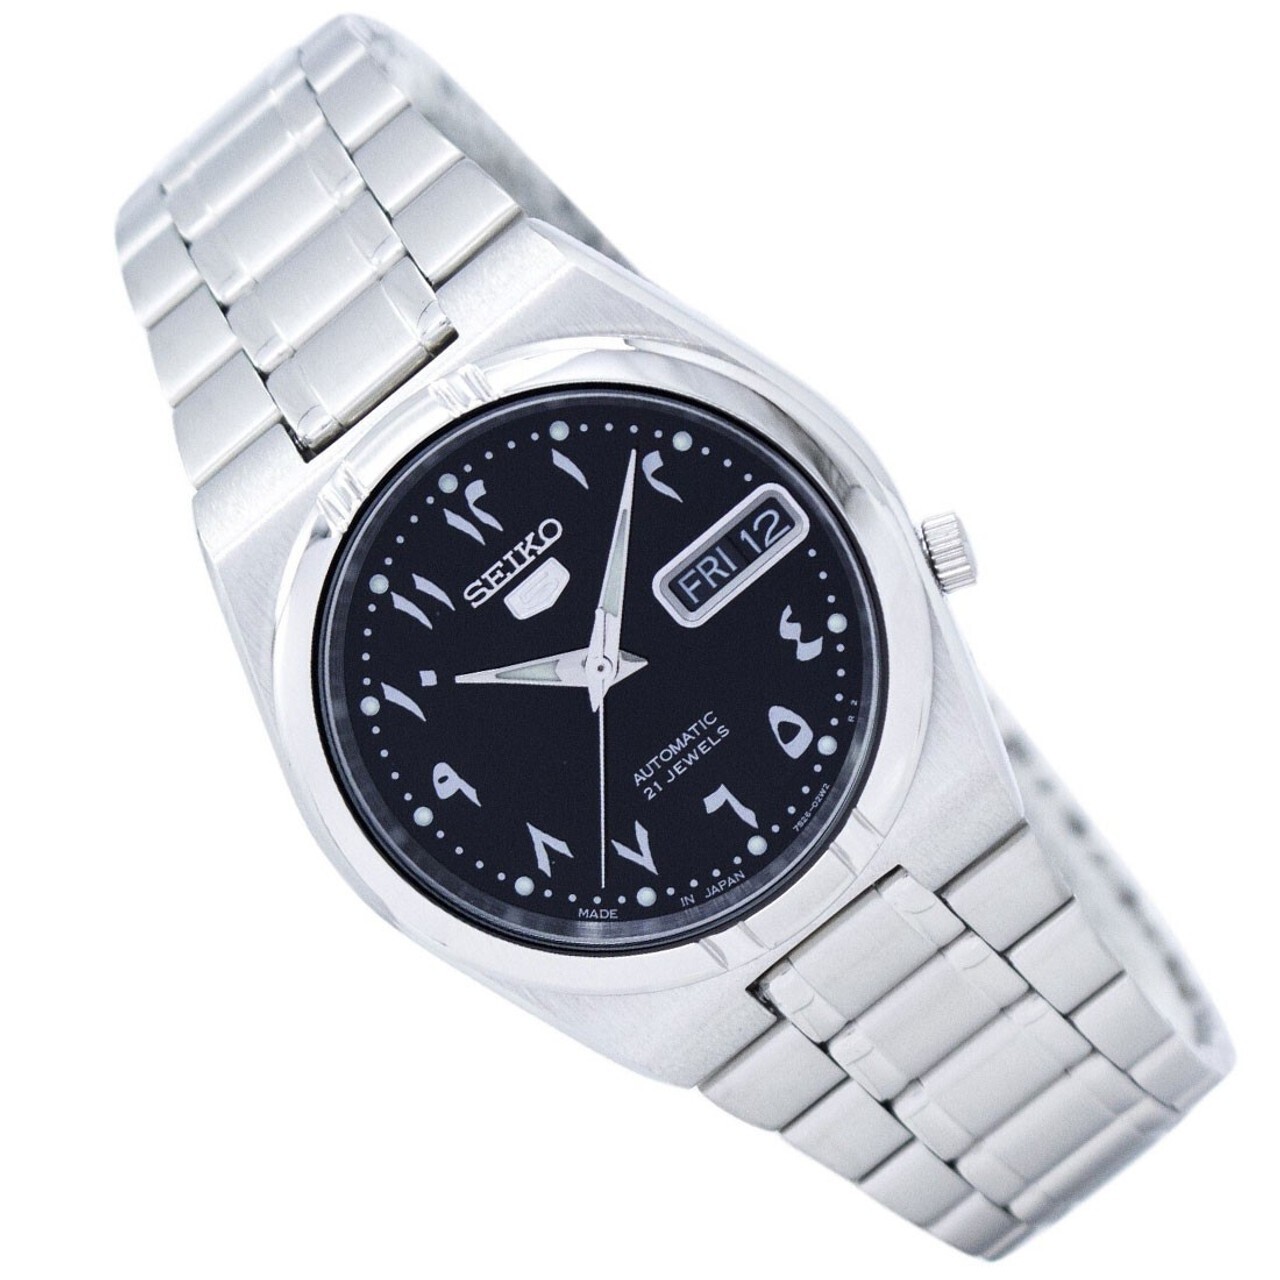 Reloj automático Mujer Seiko 5 Arabic SNK063J5 34mm Special Gulf Edition dial negro correa acero MADE IN